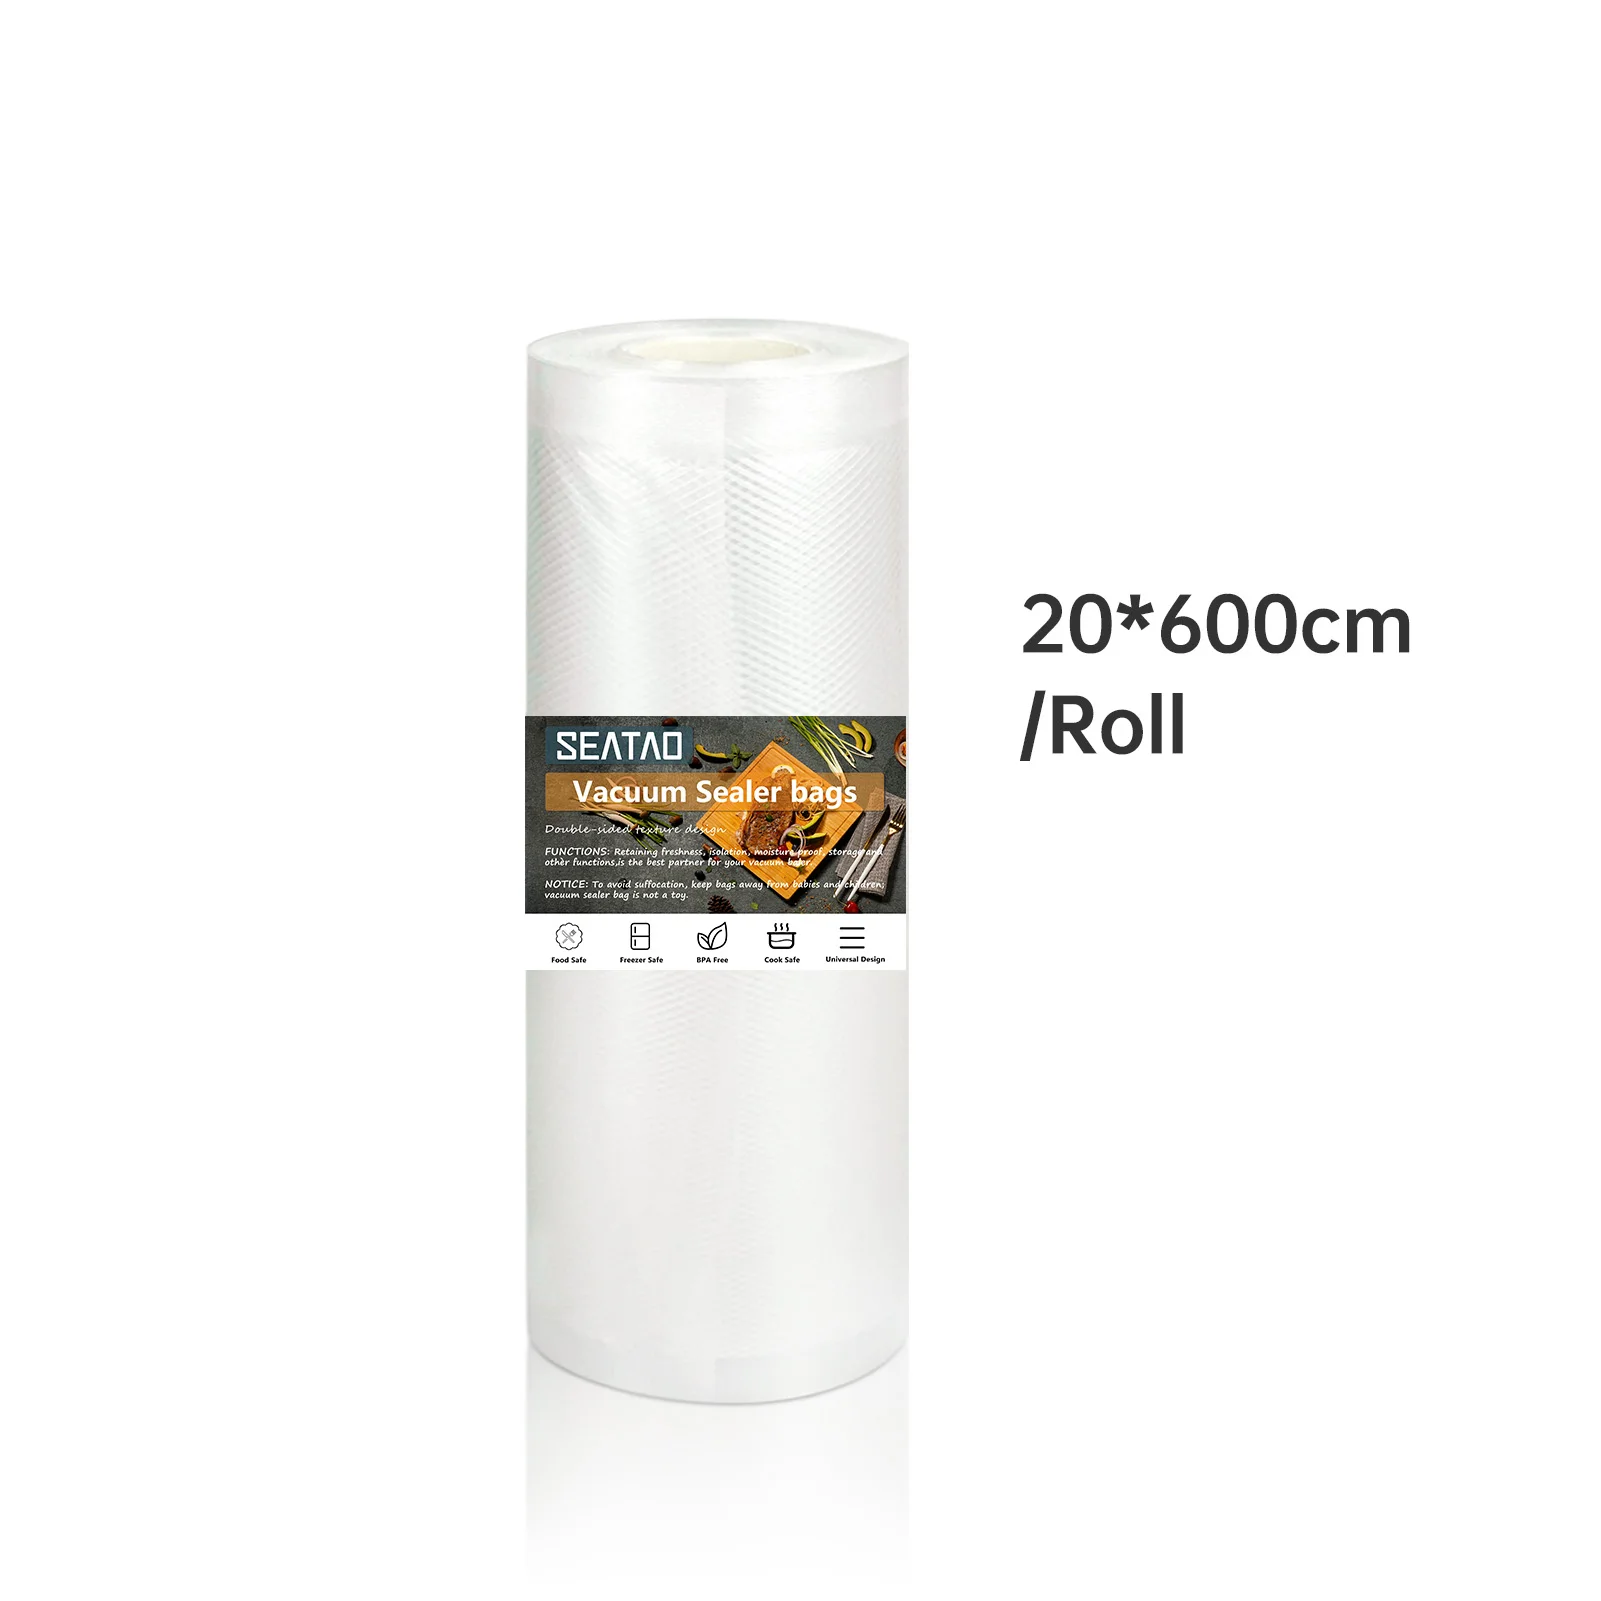 20x600cm 1 Roll